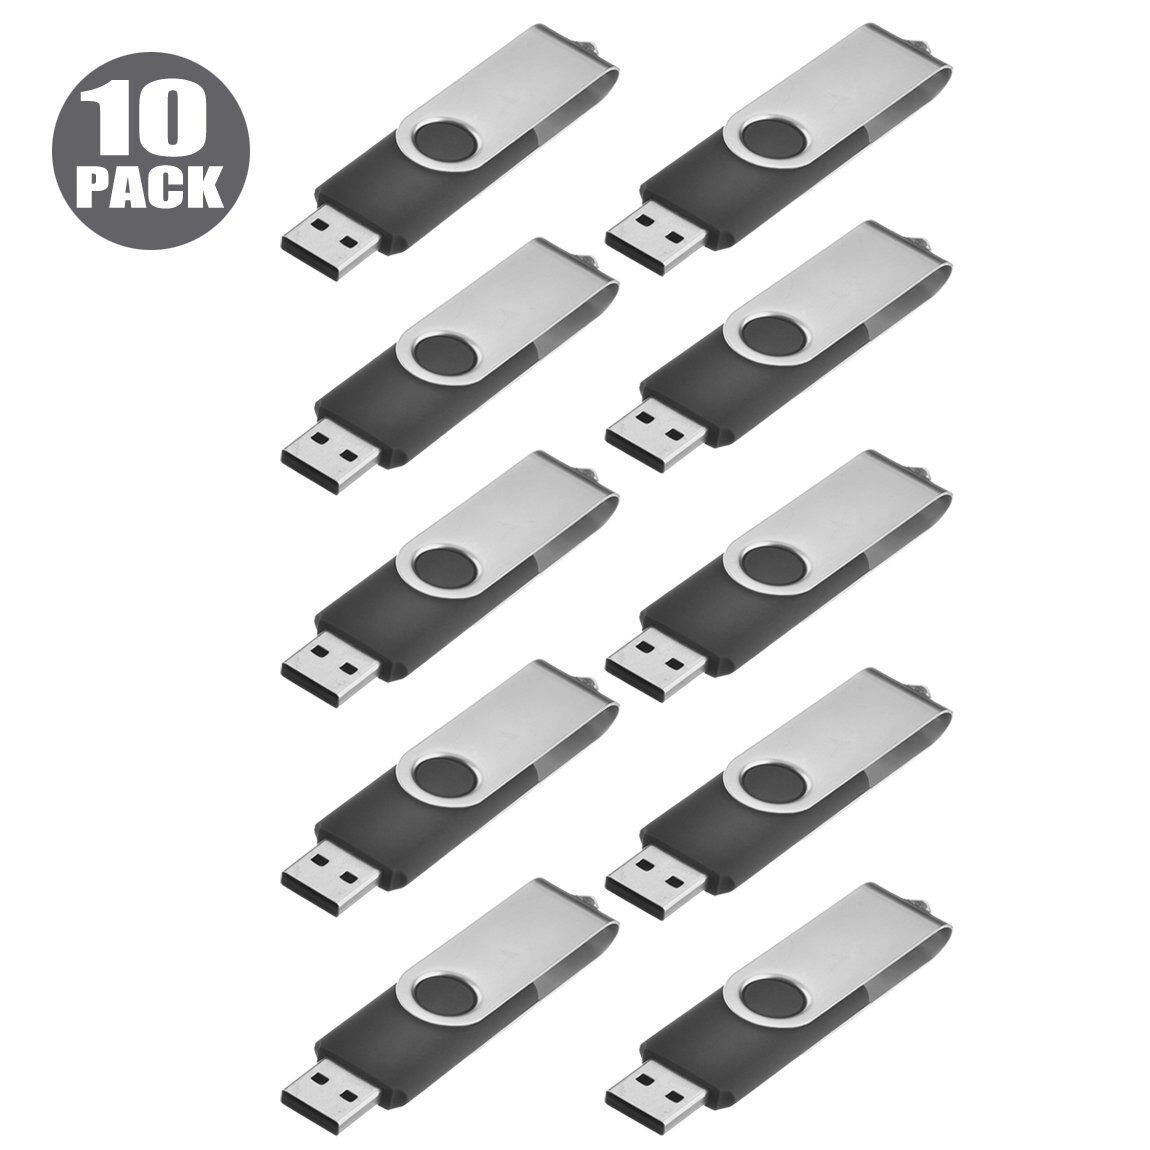 10 Pack 1G-32G USB 2.0 Flash Drive Swivel Memory Stick Thumb Pendrive Storage